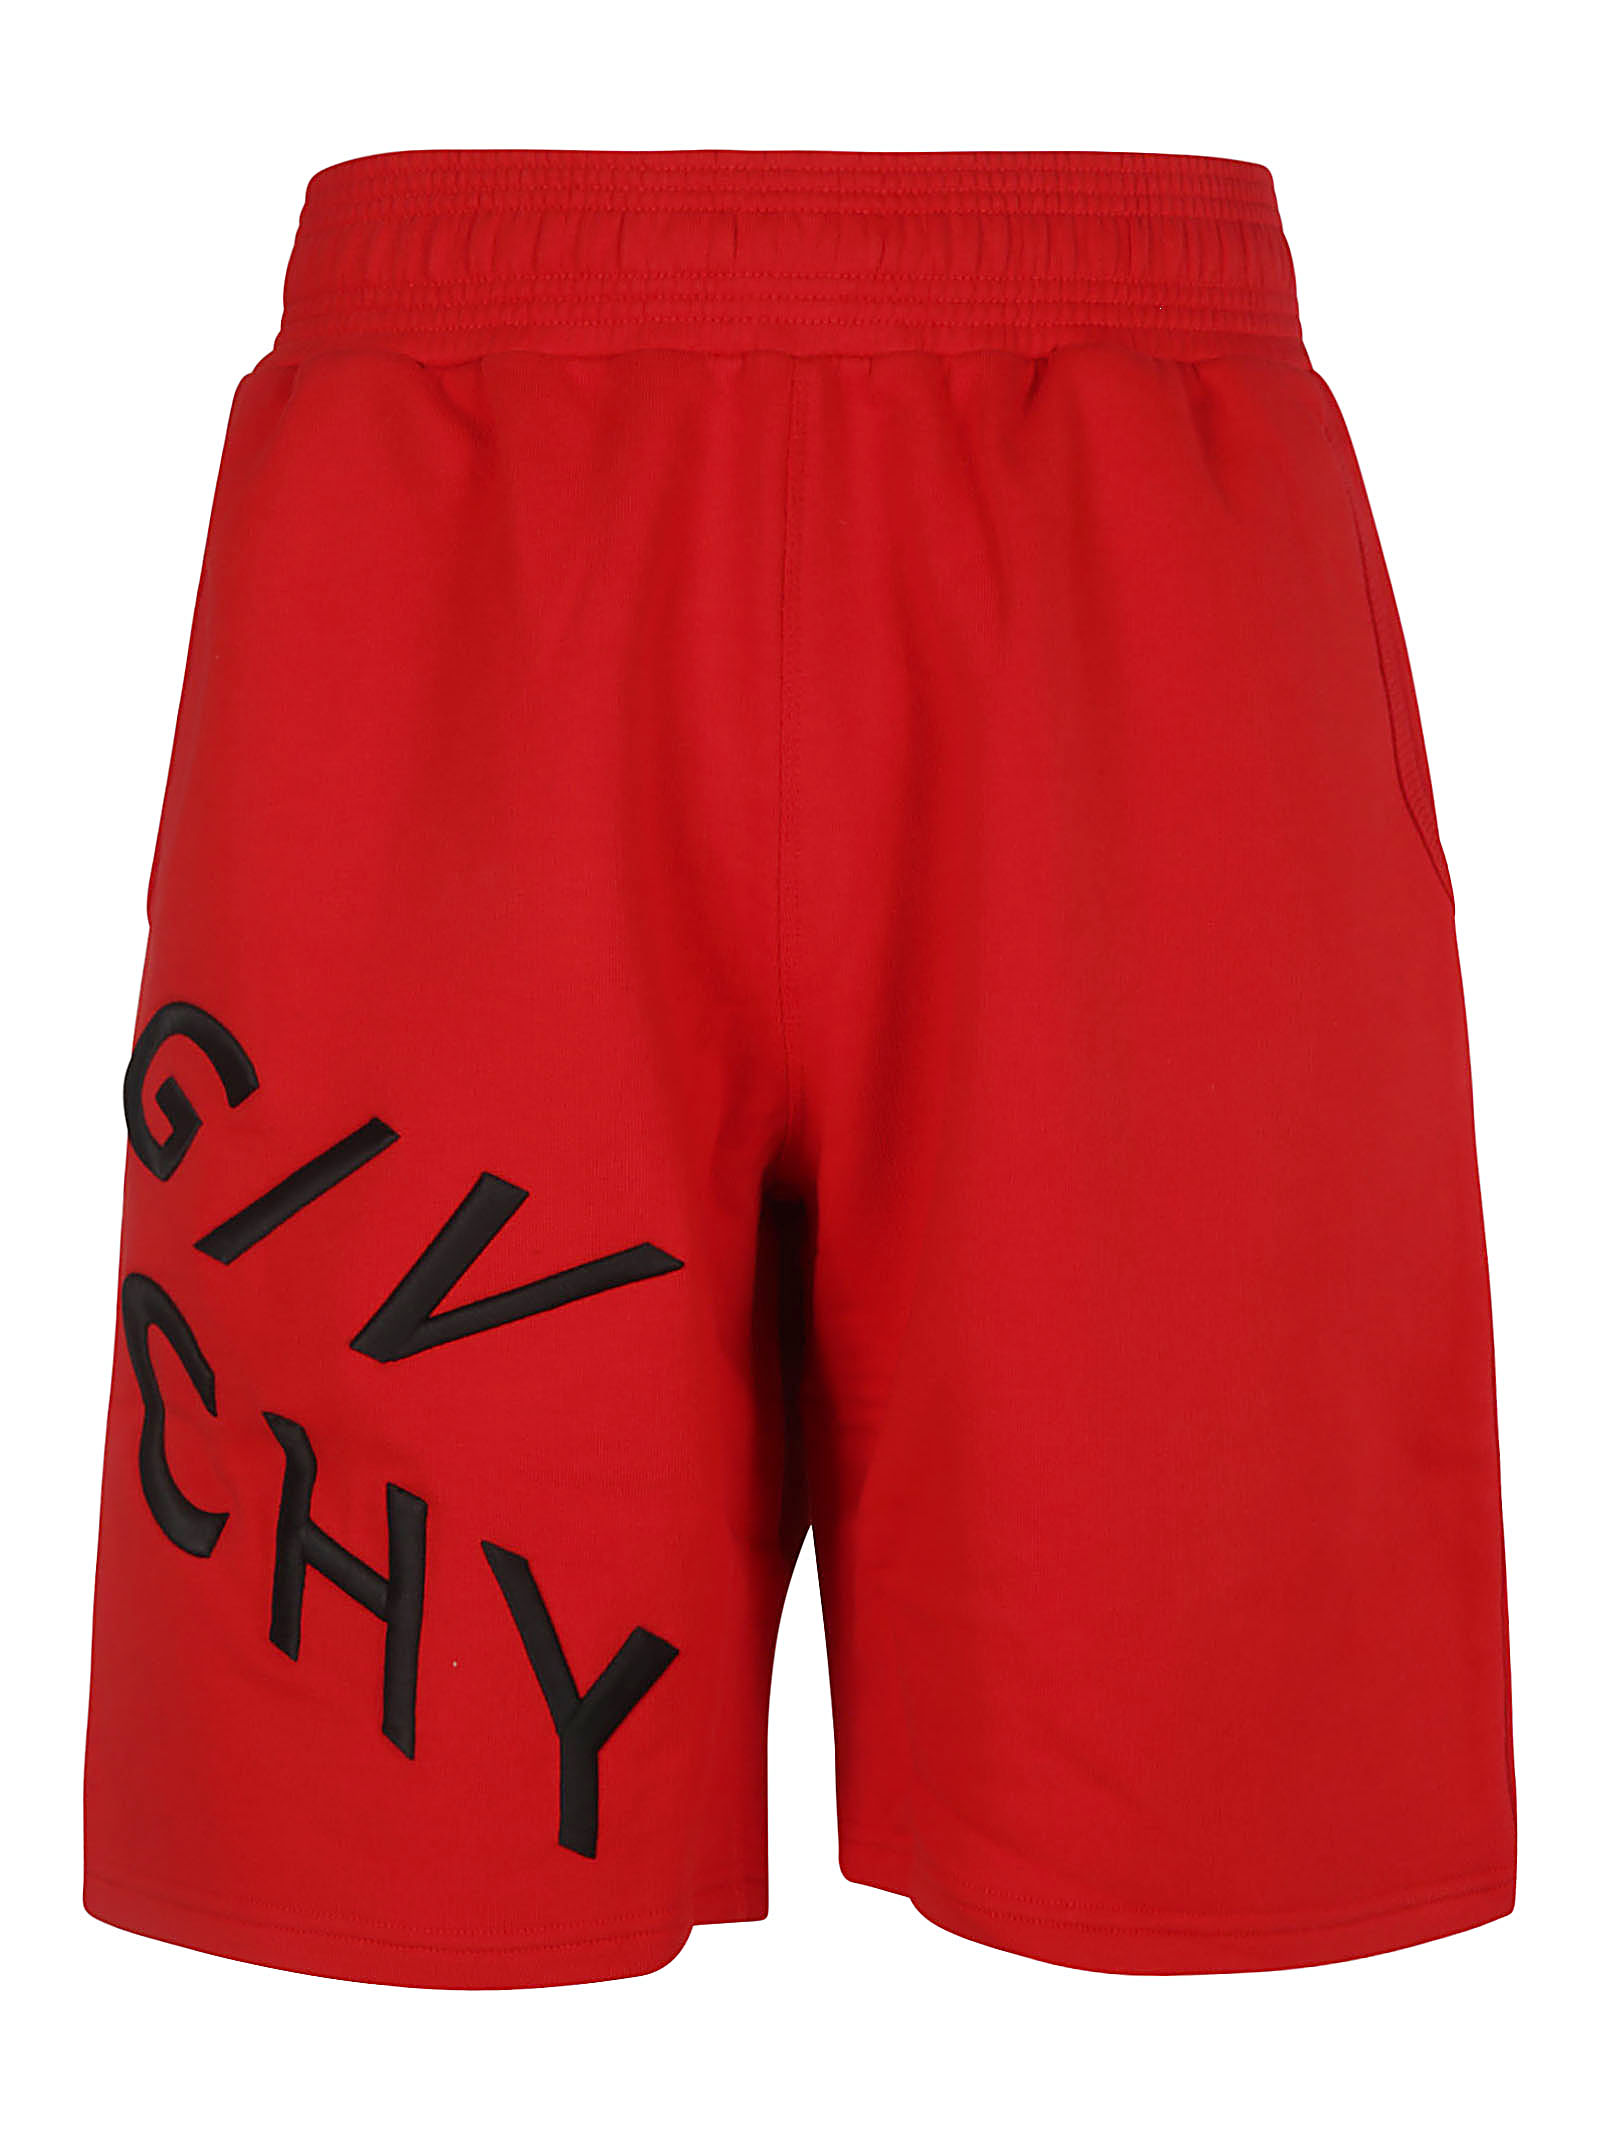 Givenchy Embroidered Logo Shorts